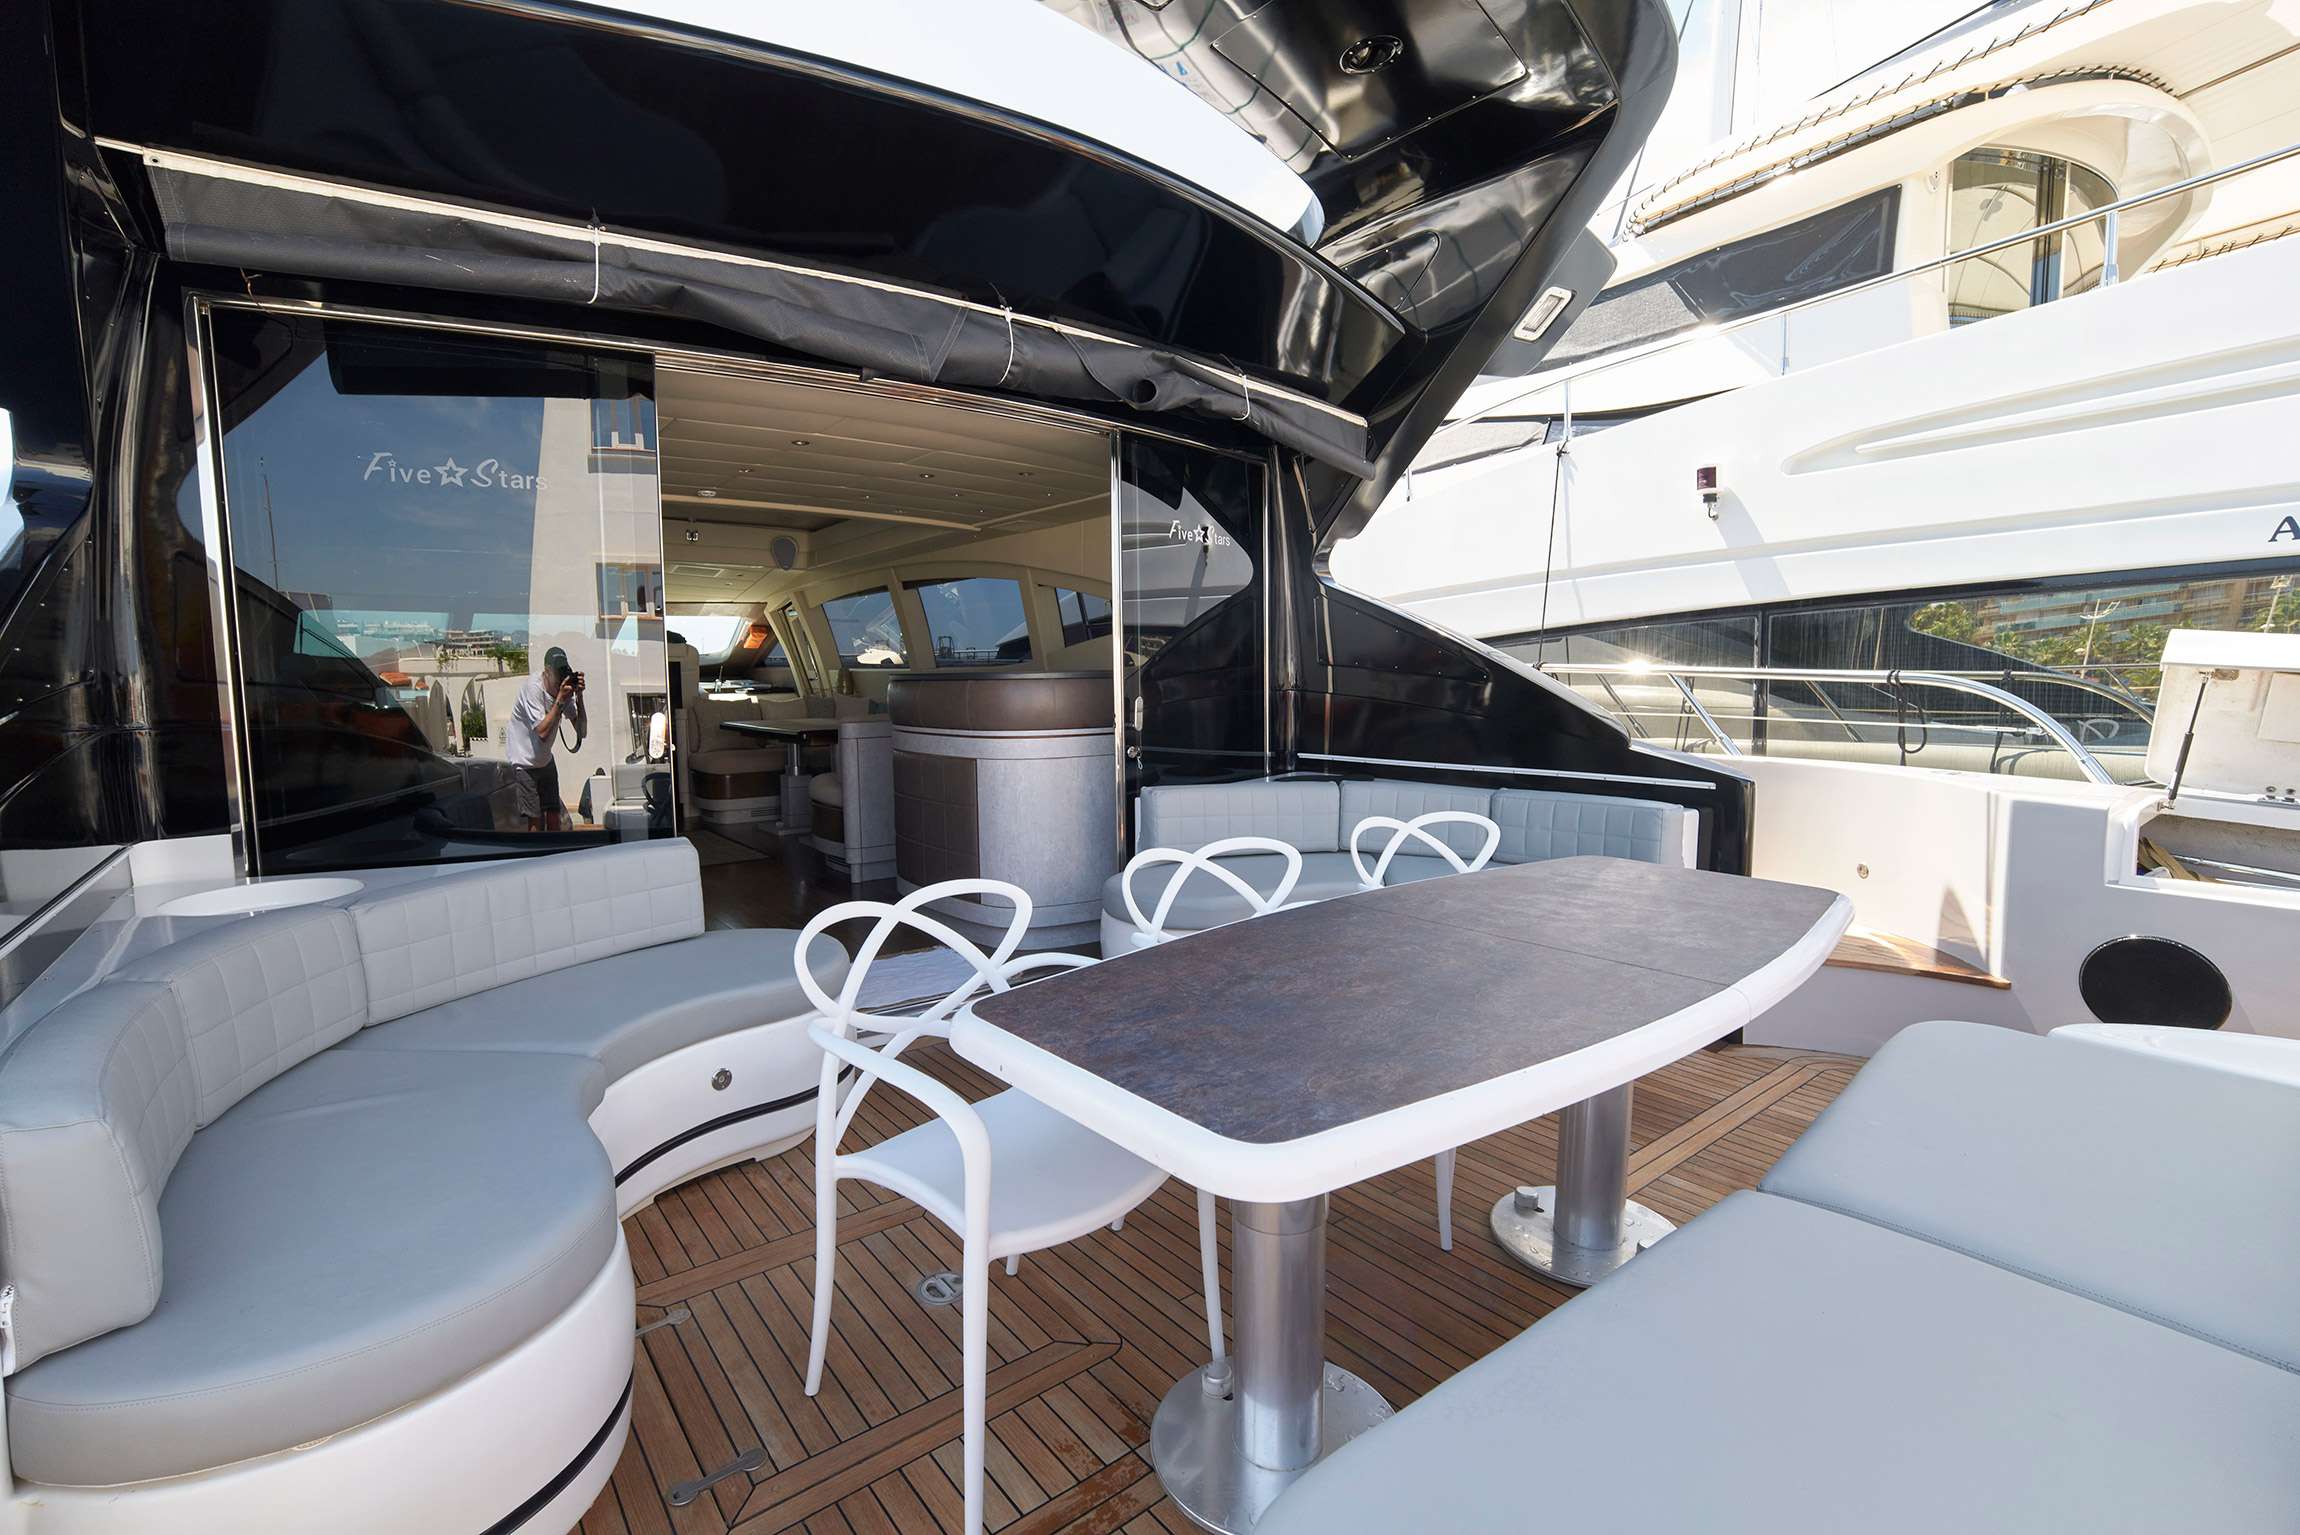 FIVE STARS - Yacht Charter Vilajoyosa & Boat hire in Balearics & Spain 3